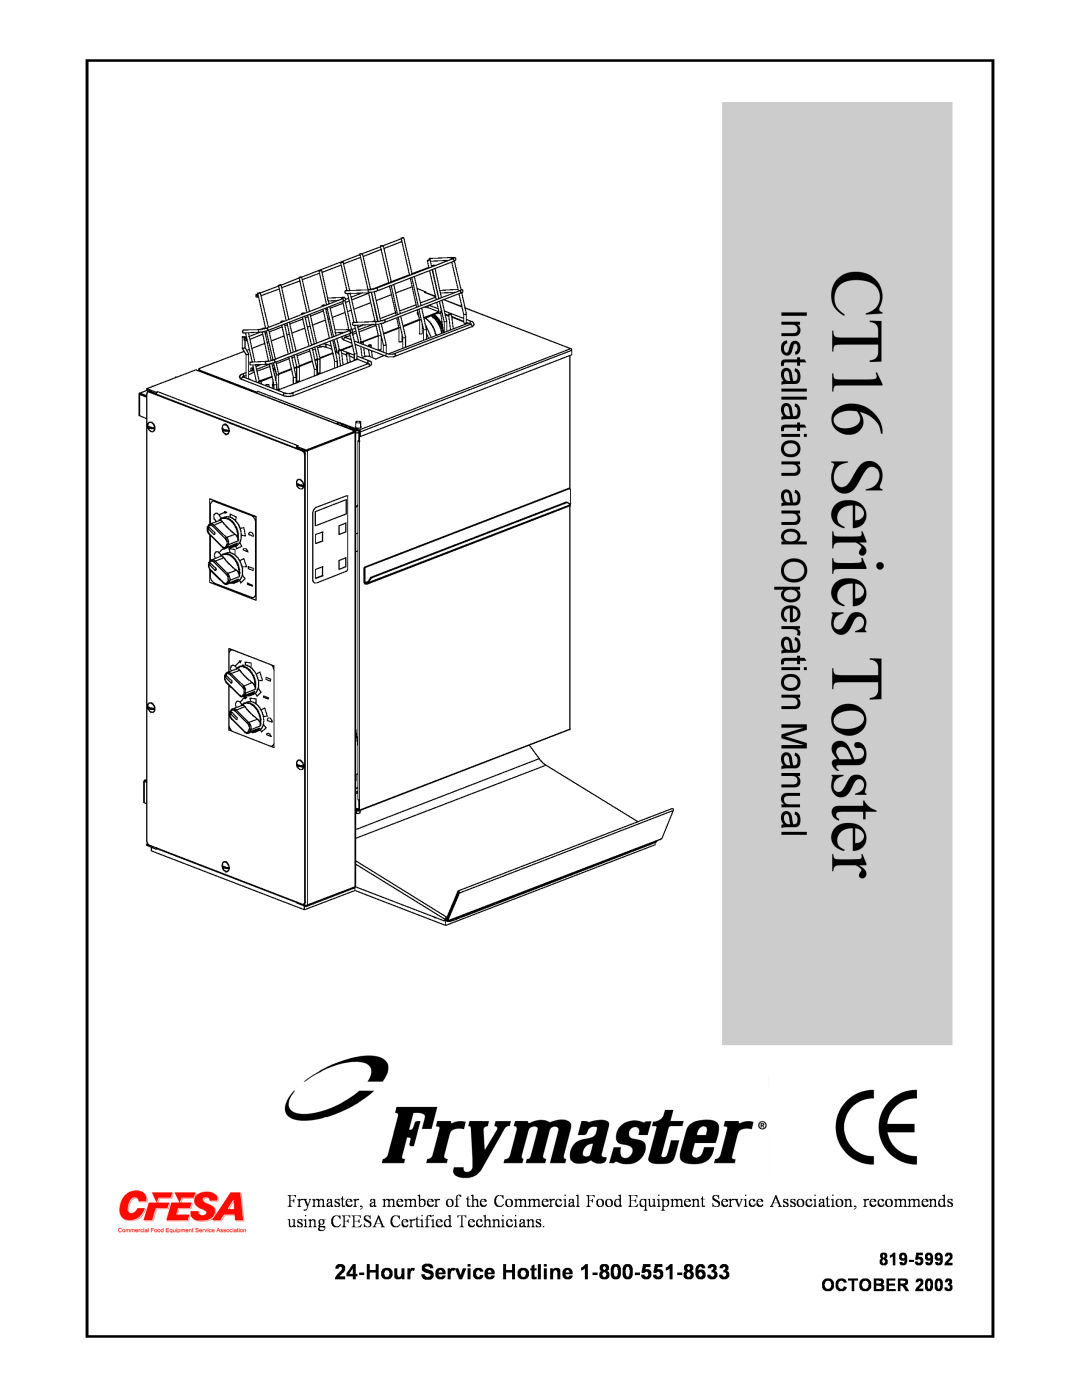 Frymaster CT16 operation manual HourService Hotline, 819-5992OCTOBER 